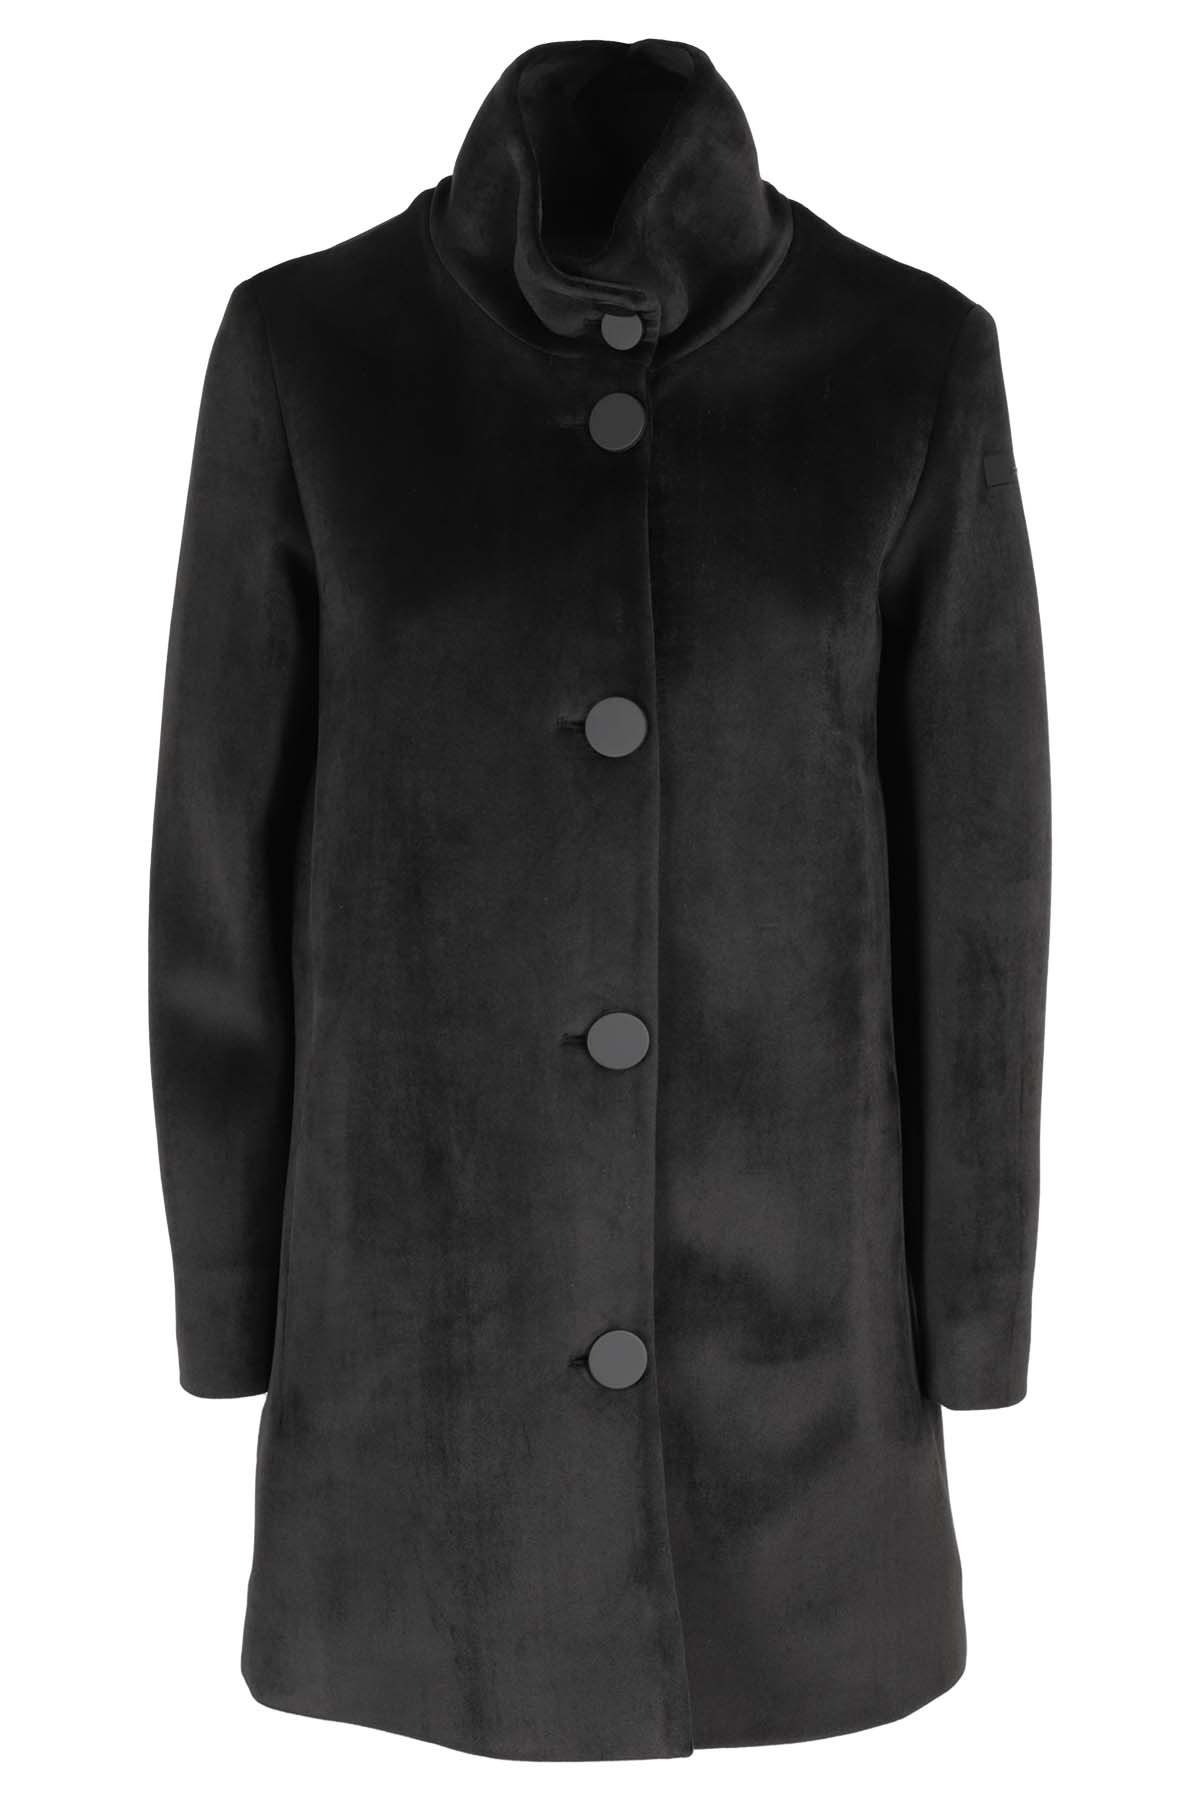 Rrd - Roberto Ricci Design Jkt Velvet Neo Coat Lady In Black